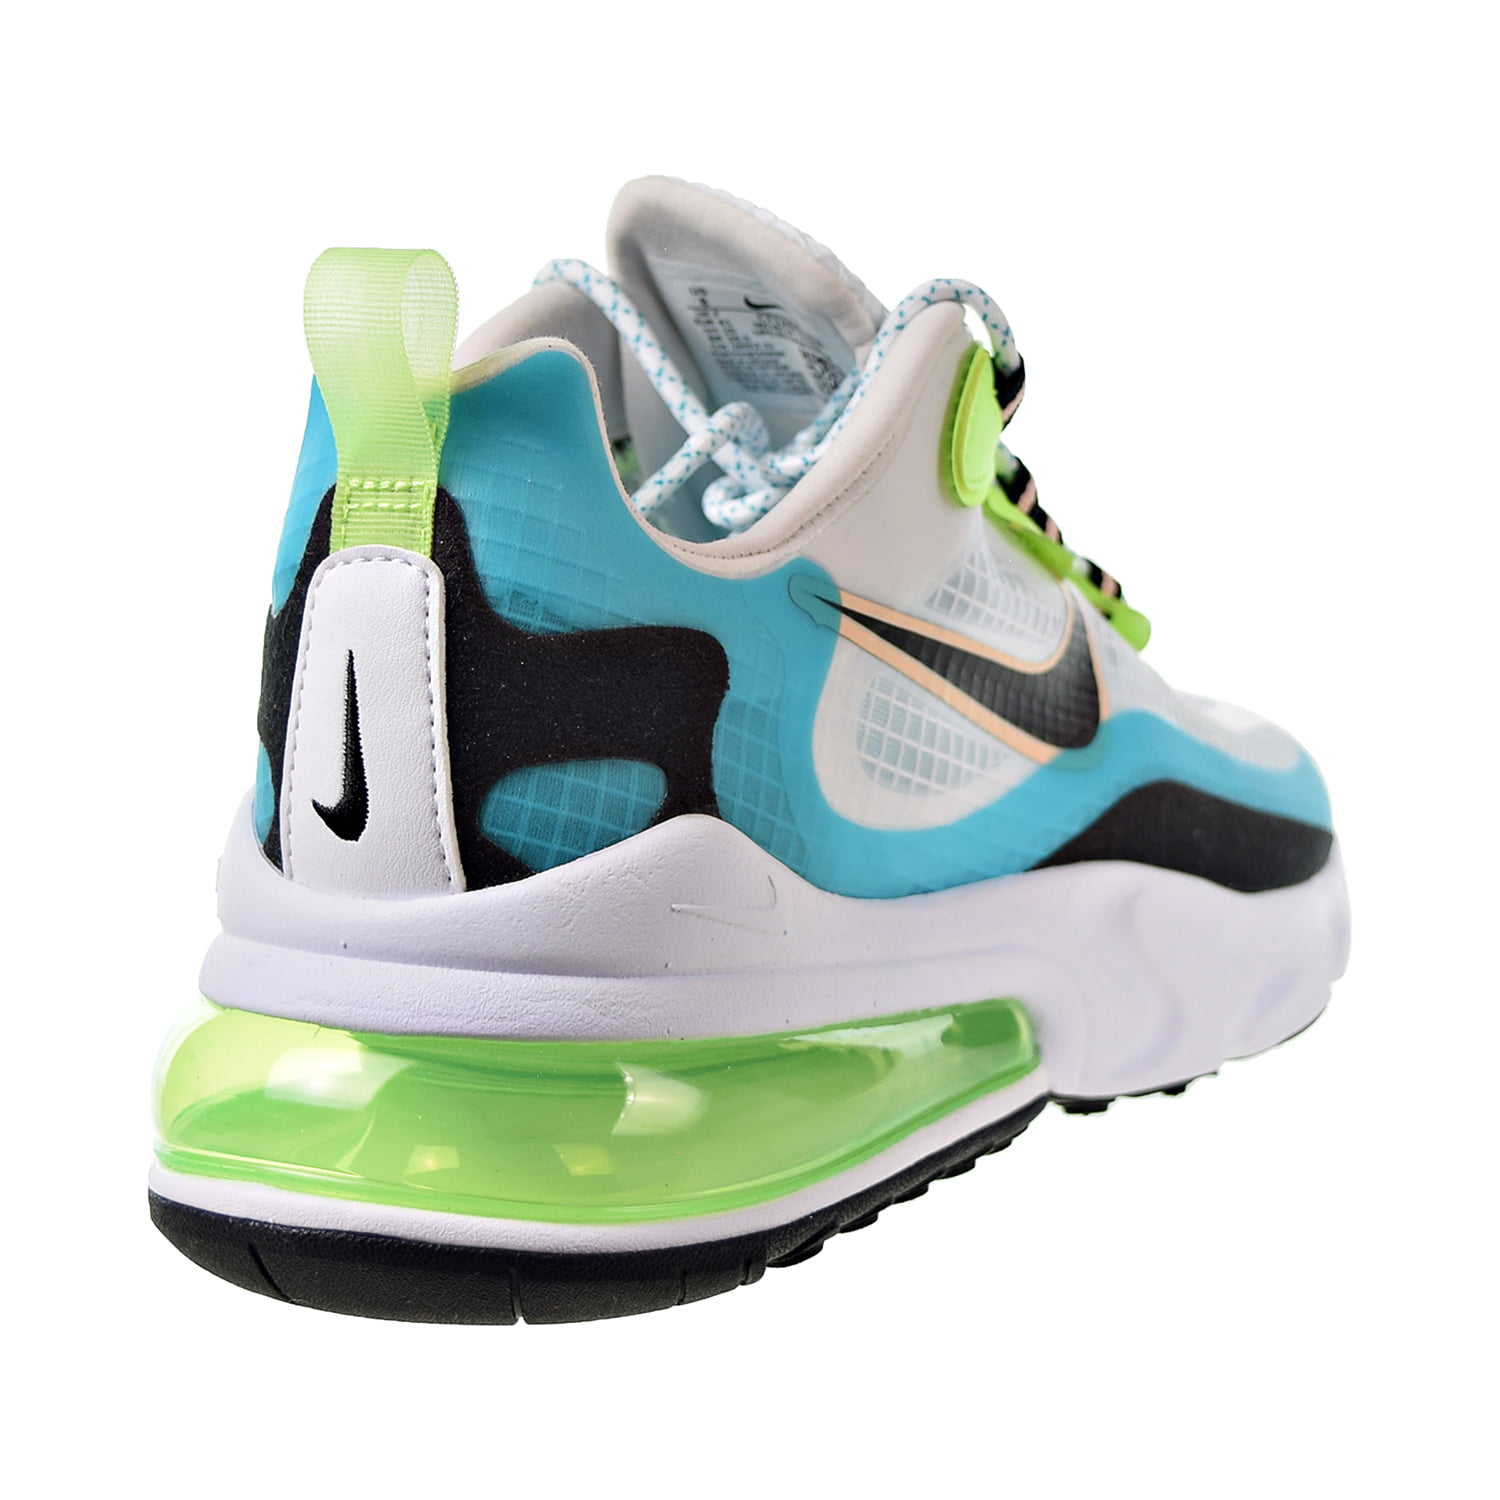 Nike Air Max 270 React SE Men's Shoes Oracle Green ct1265-300 Walmart.com